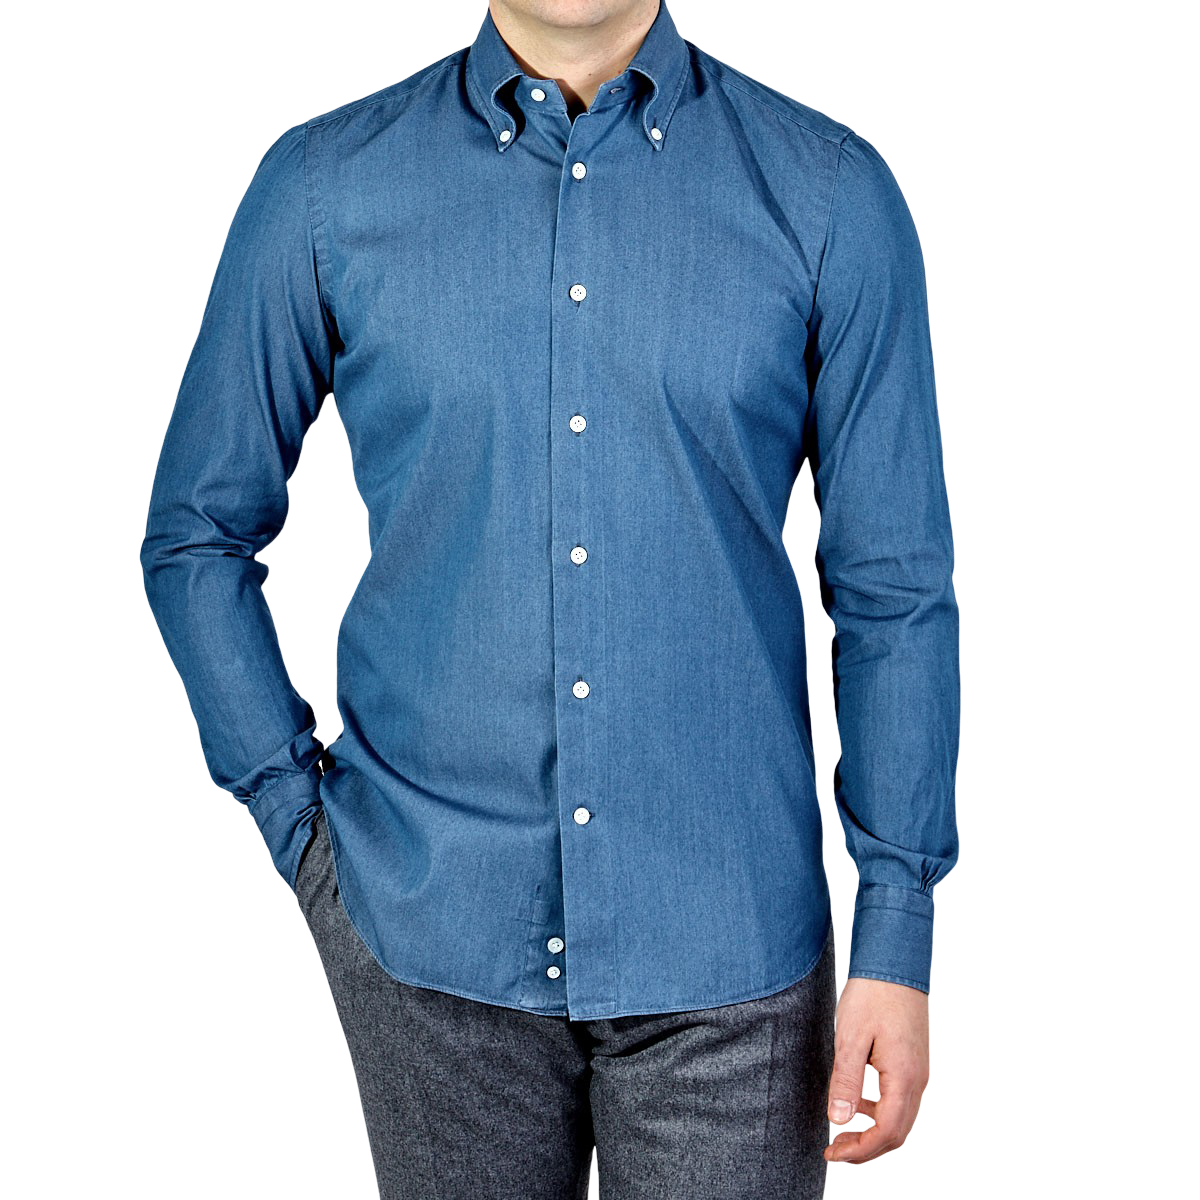 GANT INDIGO Mens Shirts Regular Fit Long Sleeve Cotton S M L XL XXL Button Shirt 